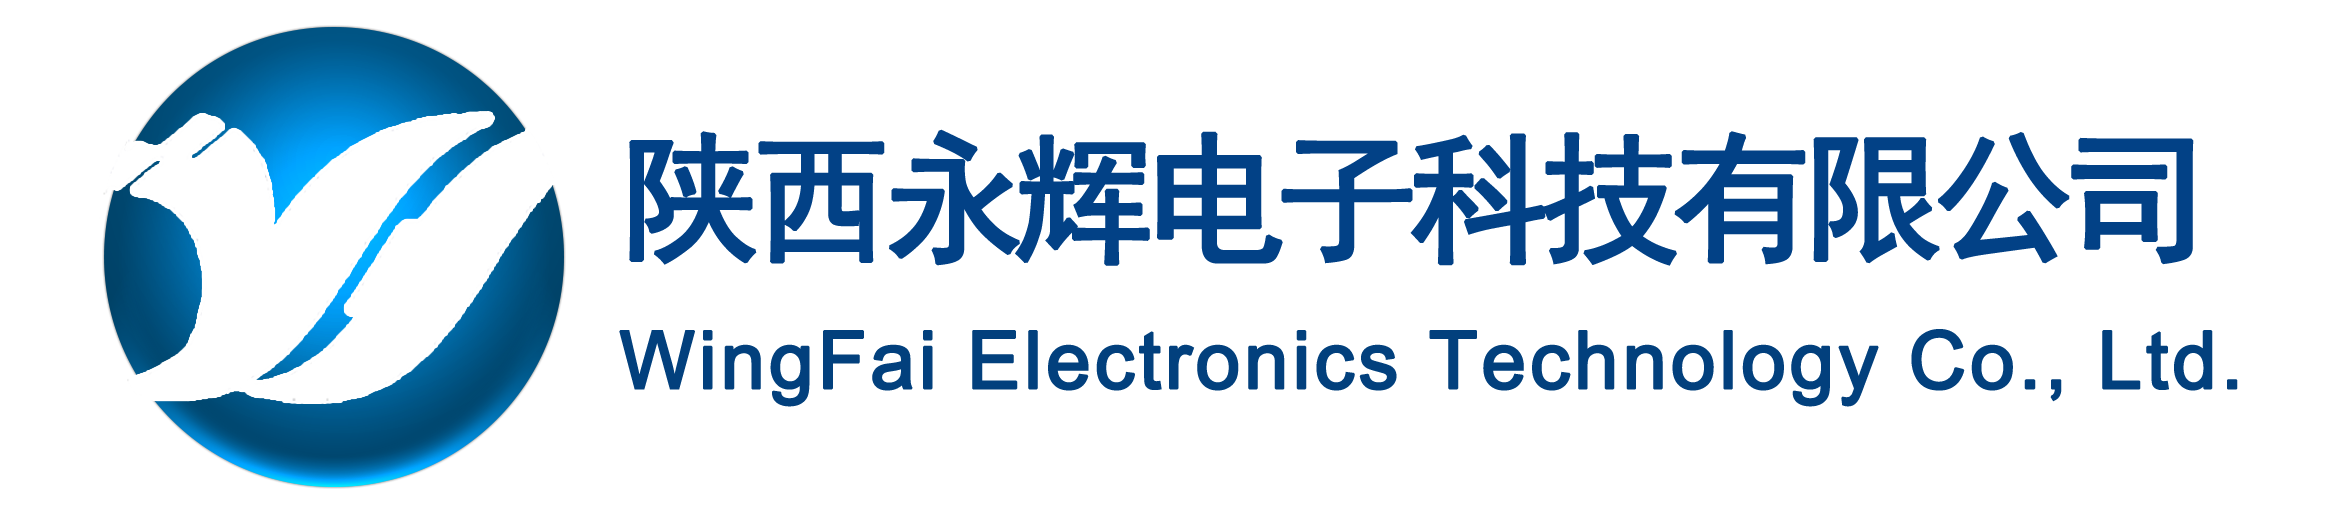 大永辉logo.png